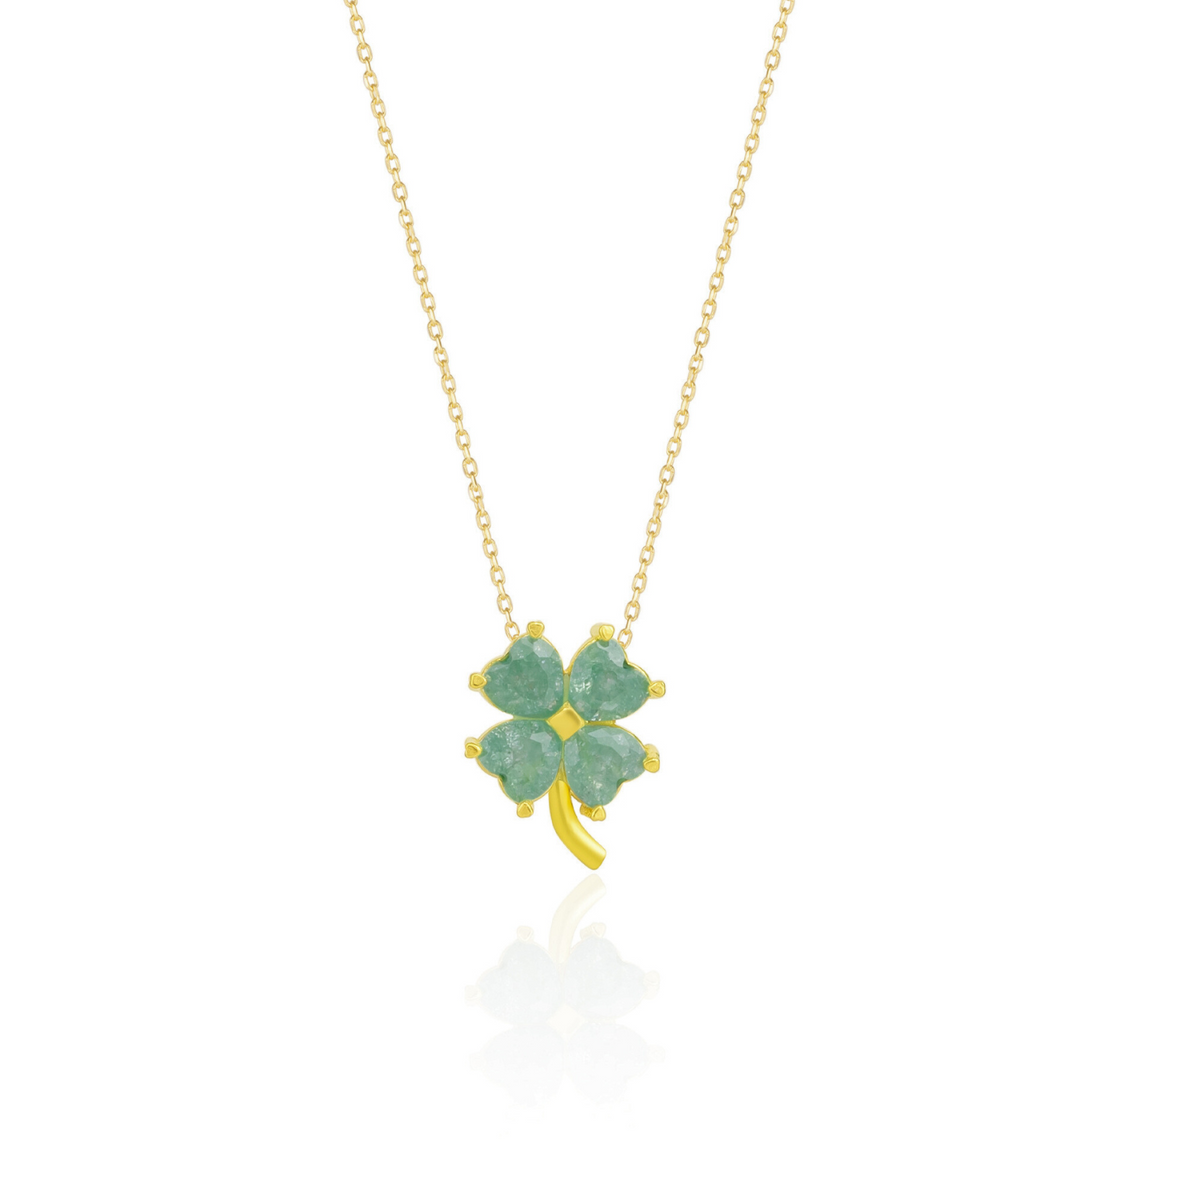 Four Leaf Clover Sterling Silver Necklace - Green